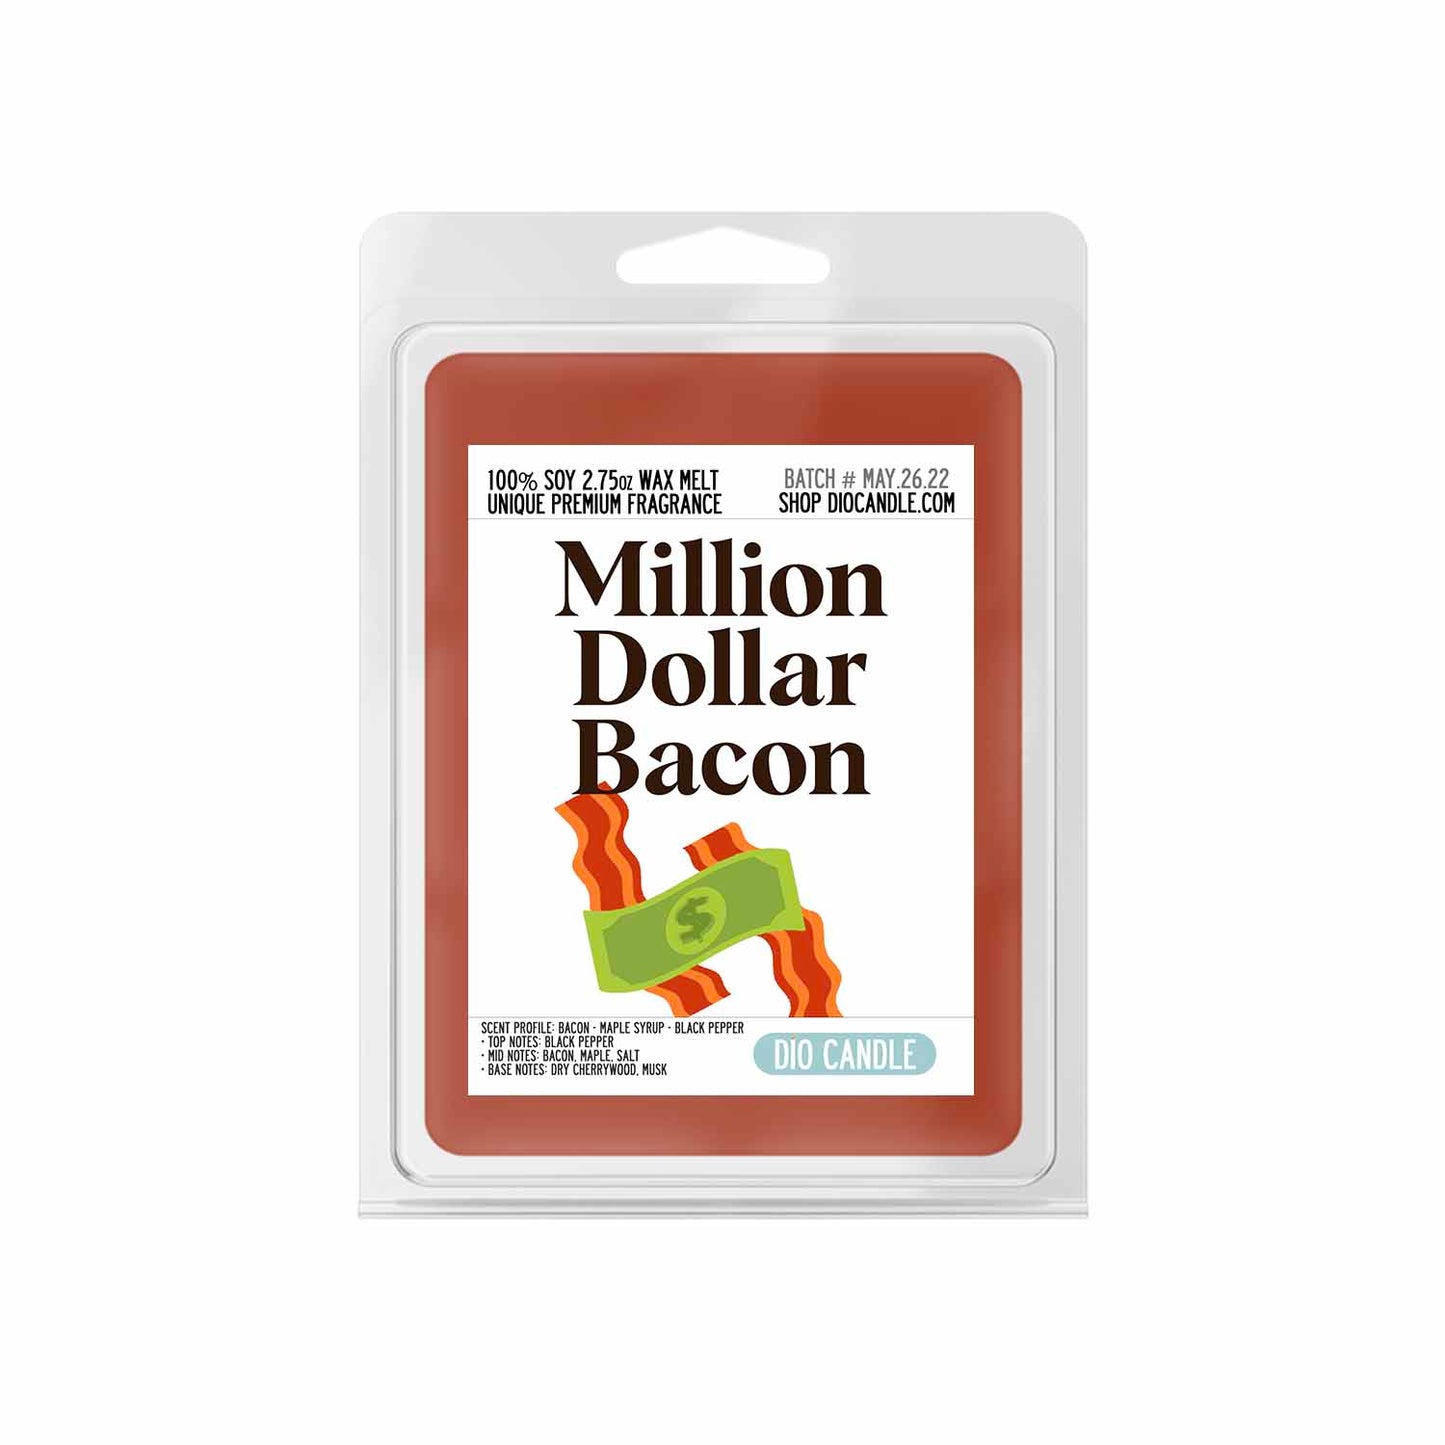 Million Dollar Bacon Candle